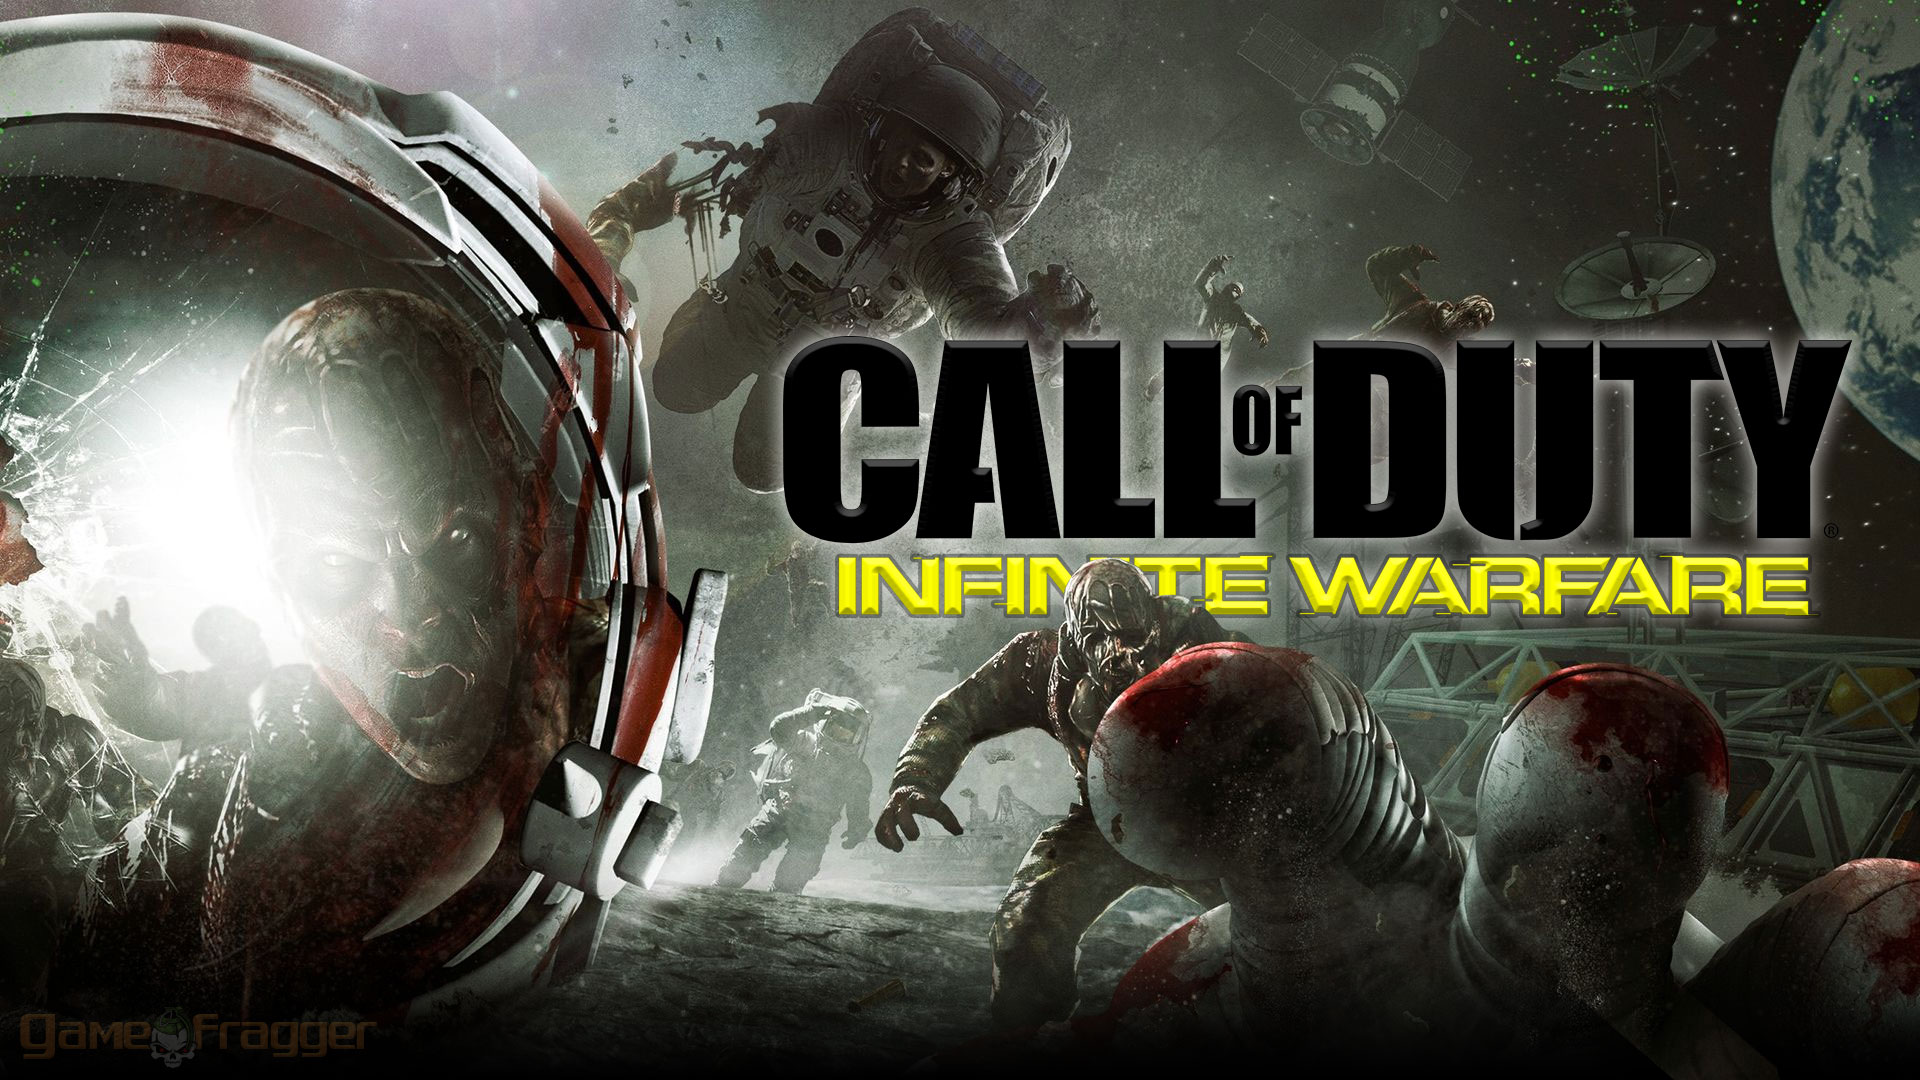 Call of Duty Infinite Warfare CoD: Infinite Warfare Wallpaper 3 Wallpaper of Duty Infinite Warfare CoD: Infinite Warfare Wallpaper 3 Background